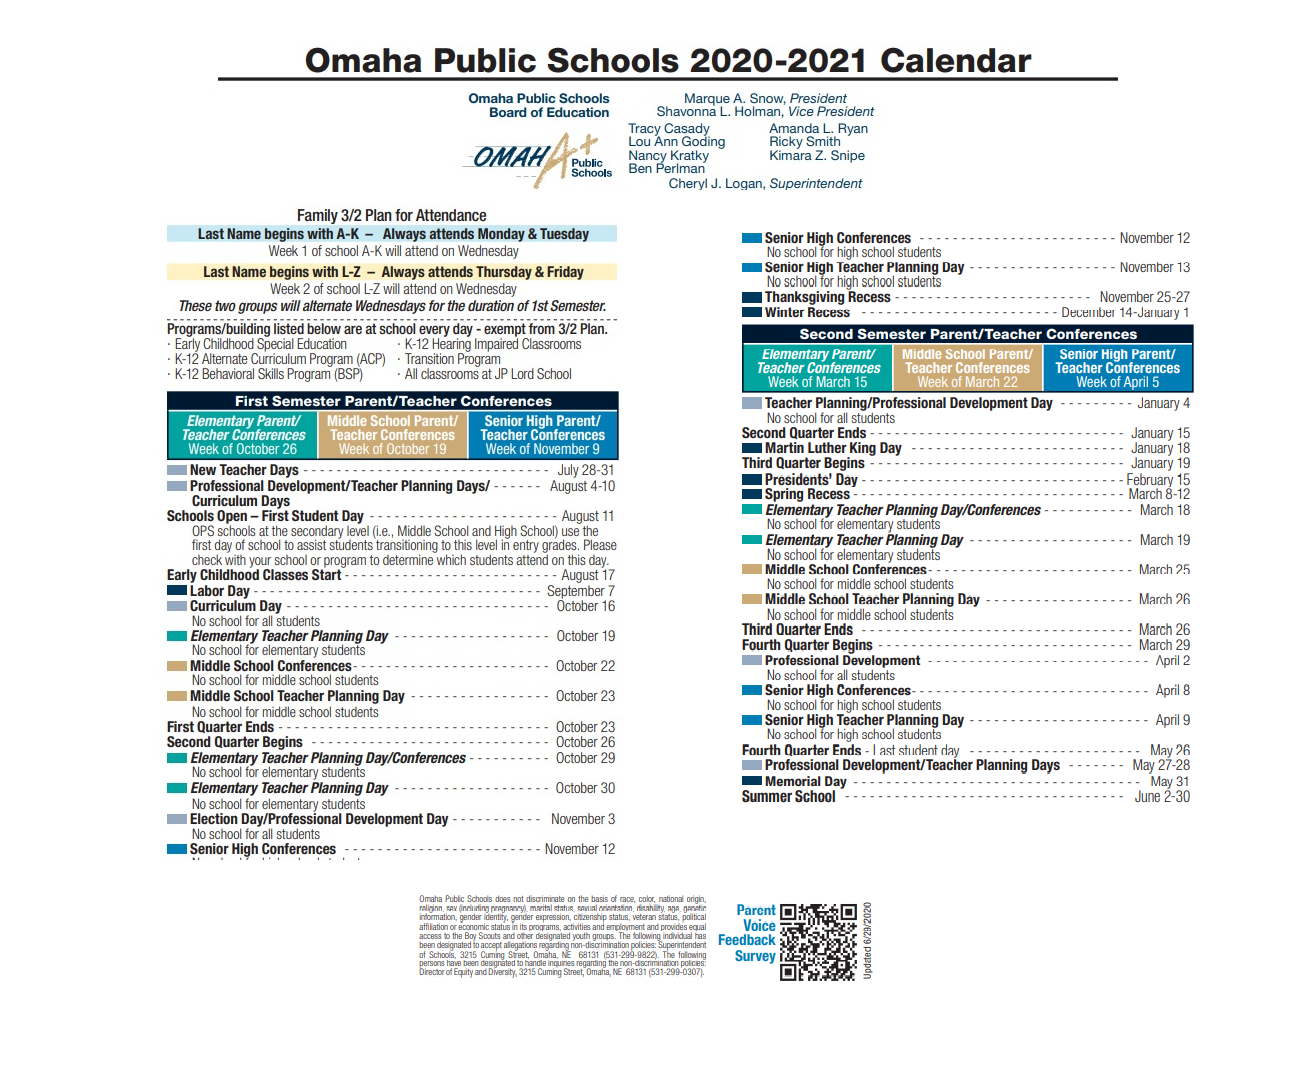 District School Academic Calendar Key for Monroe Middle School